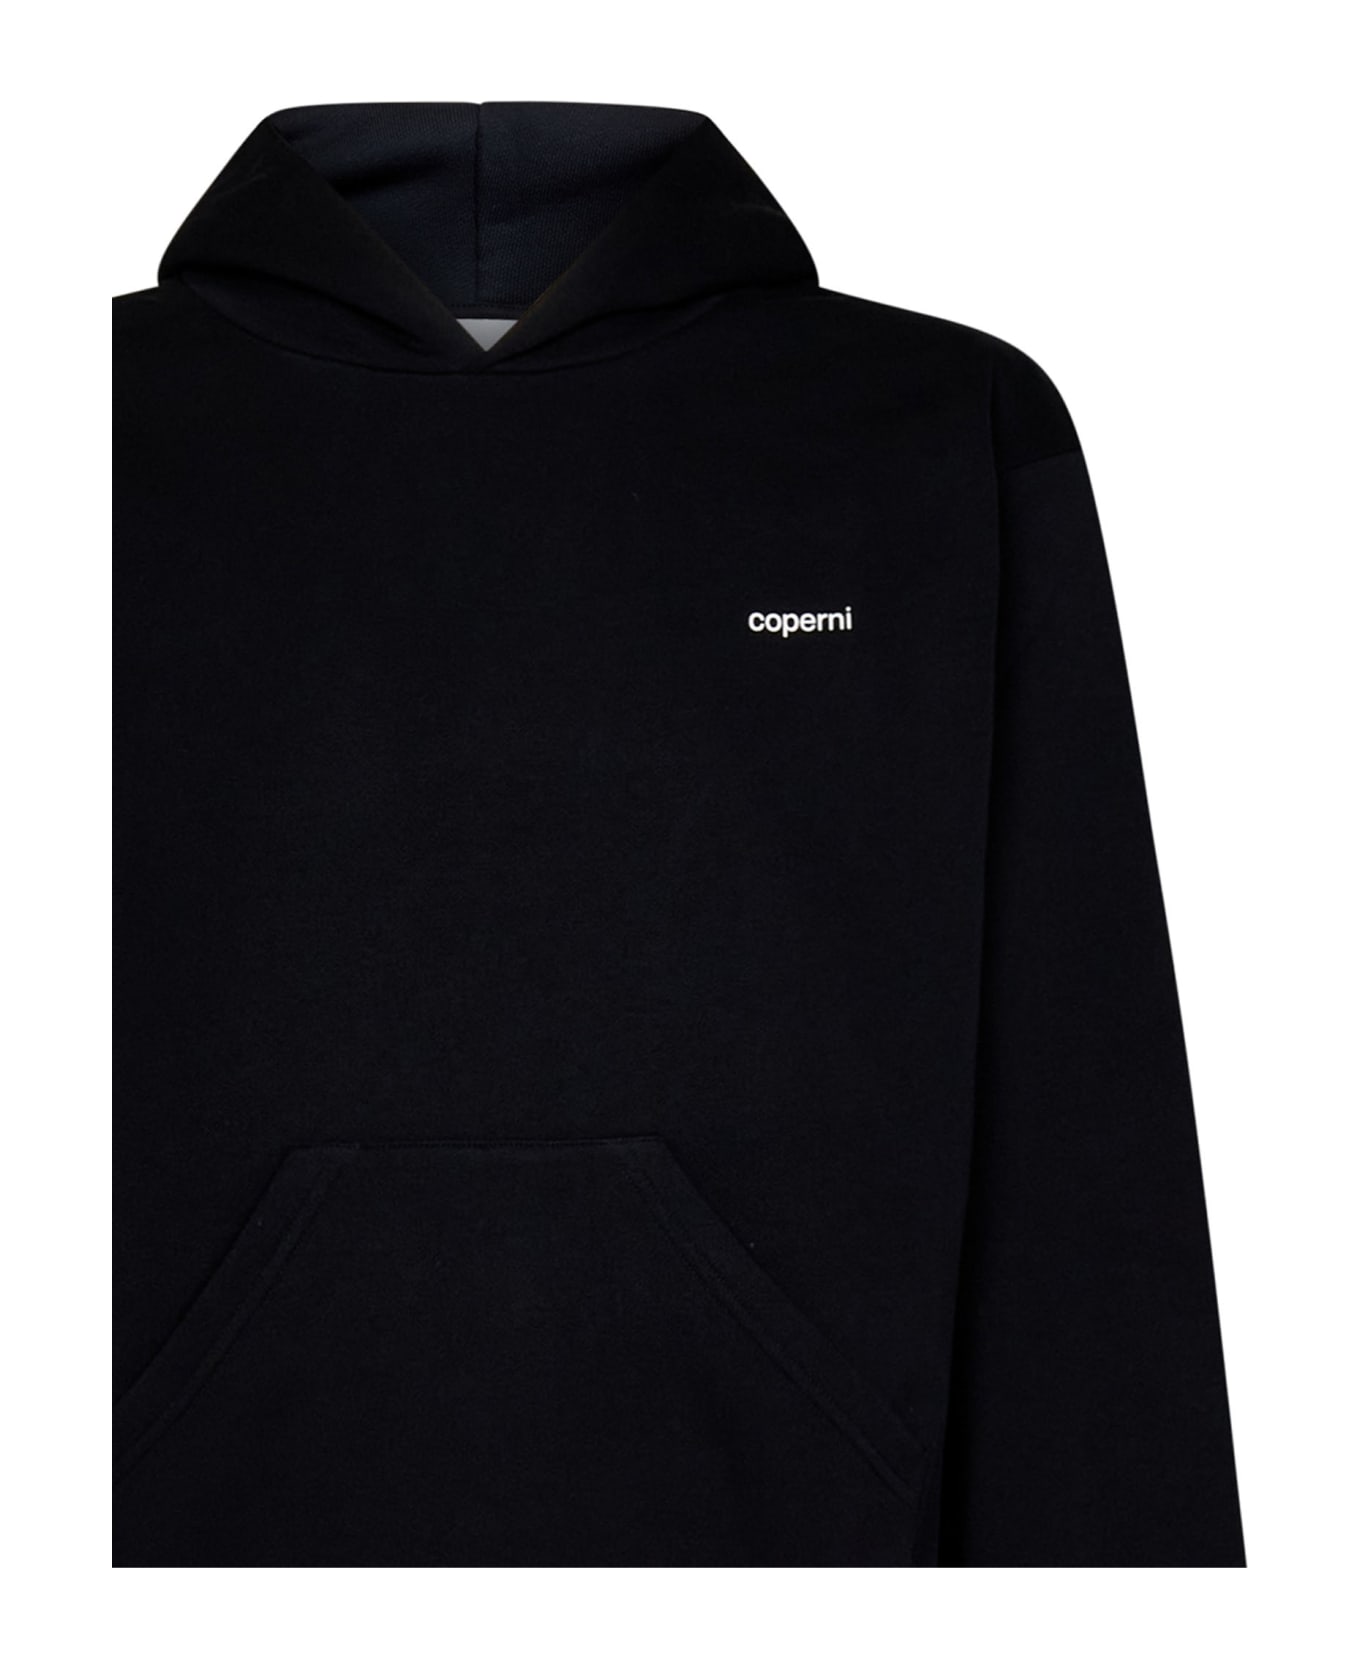 Coperni Sweatshirt - BLACK